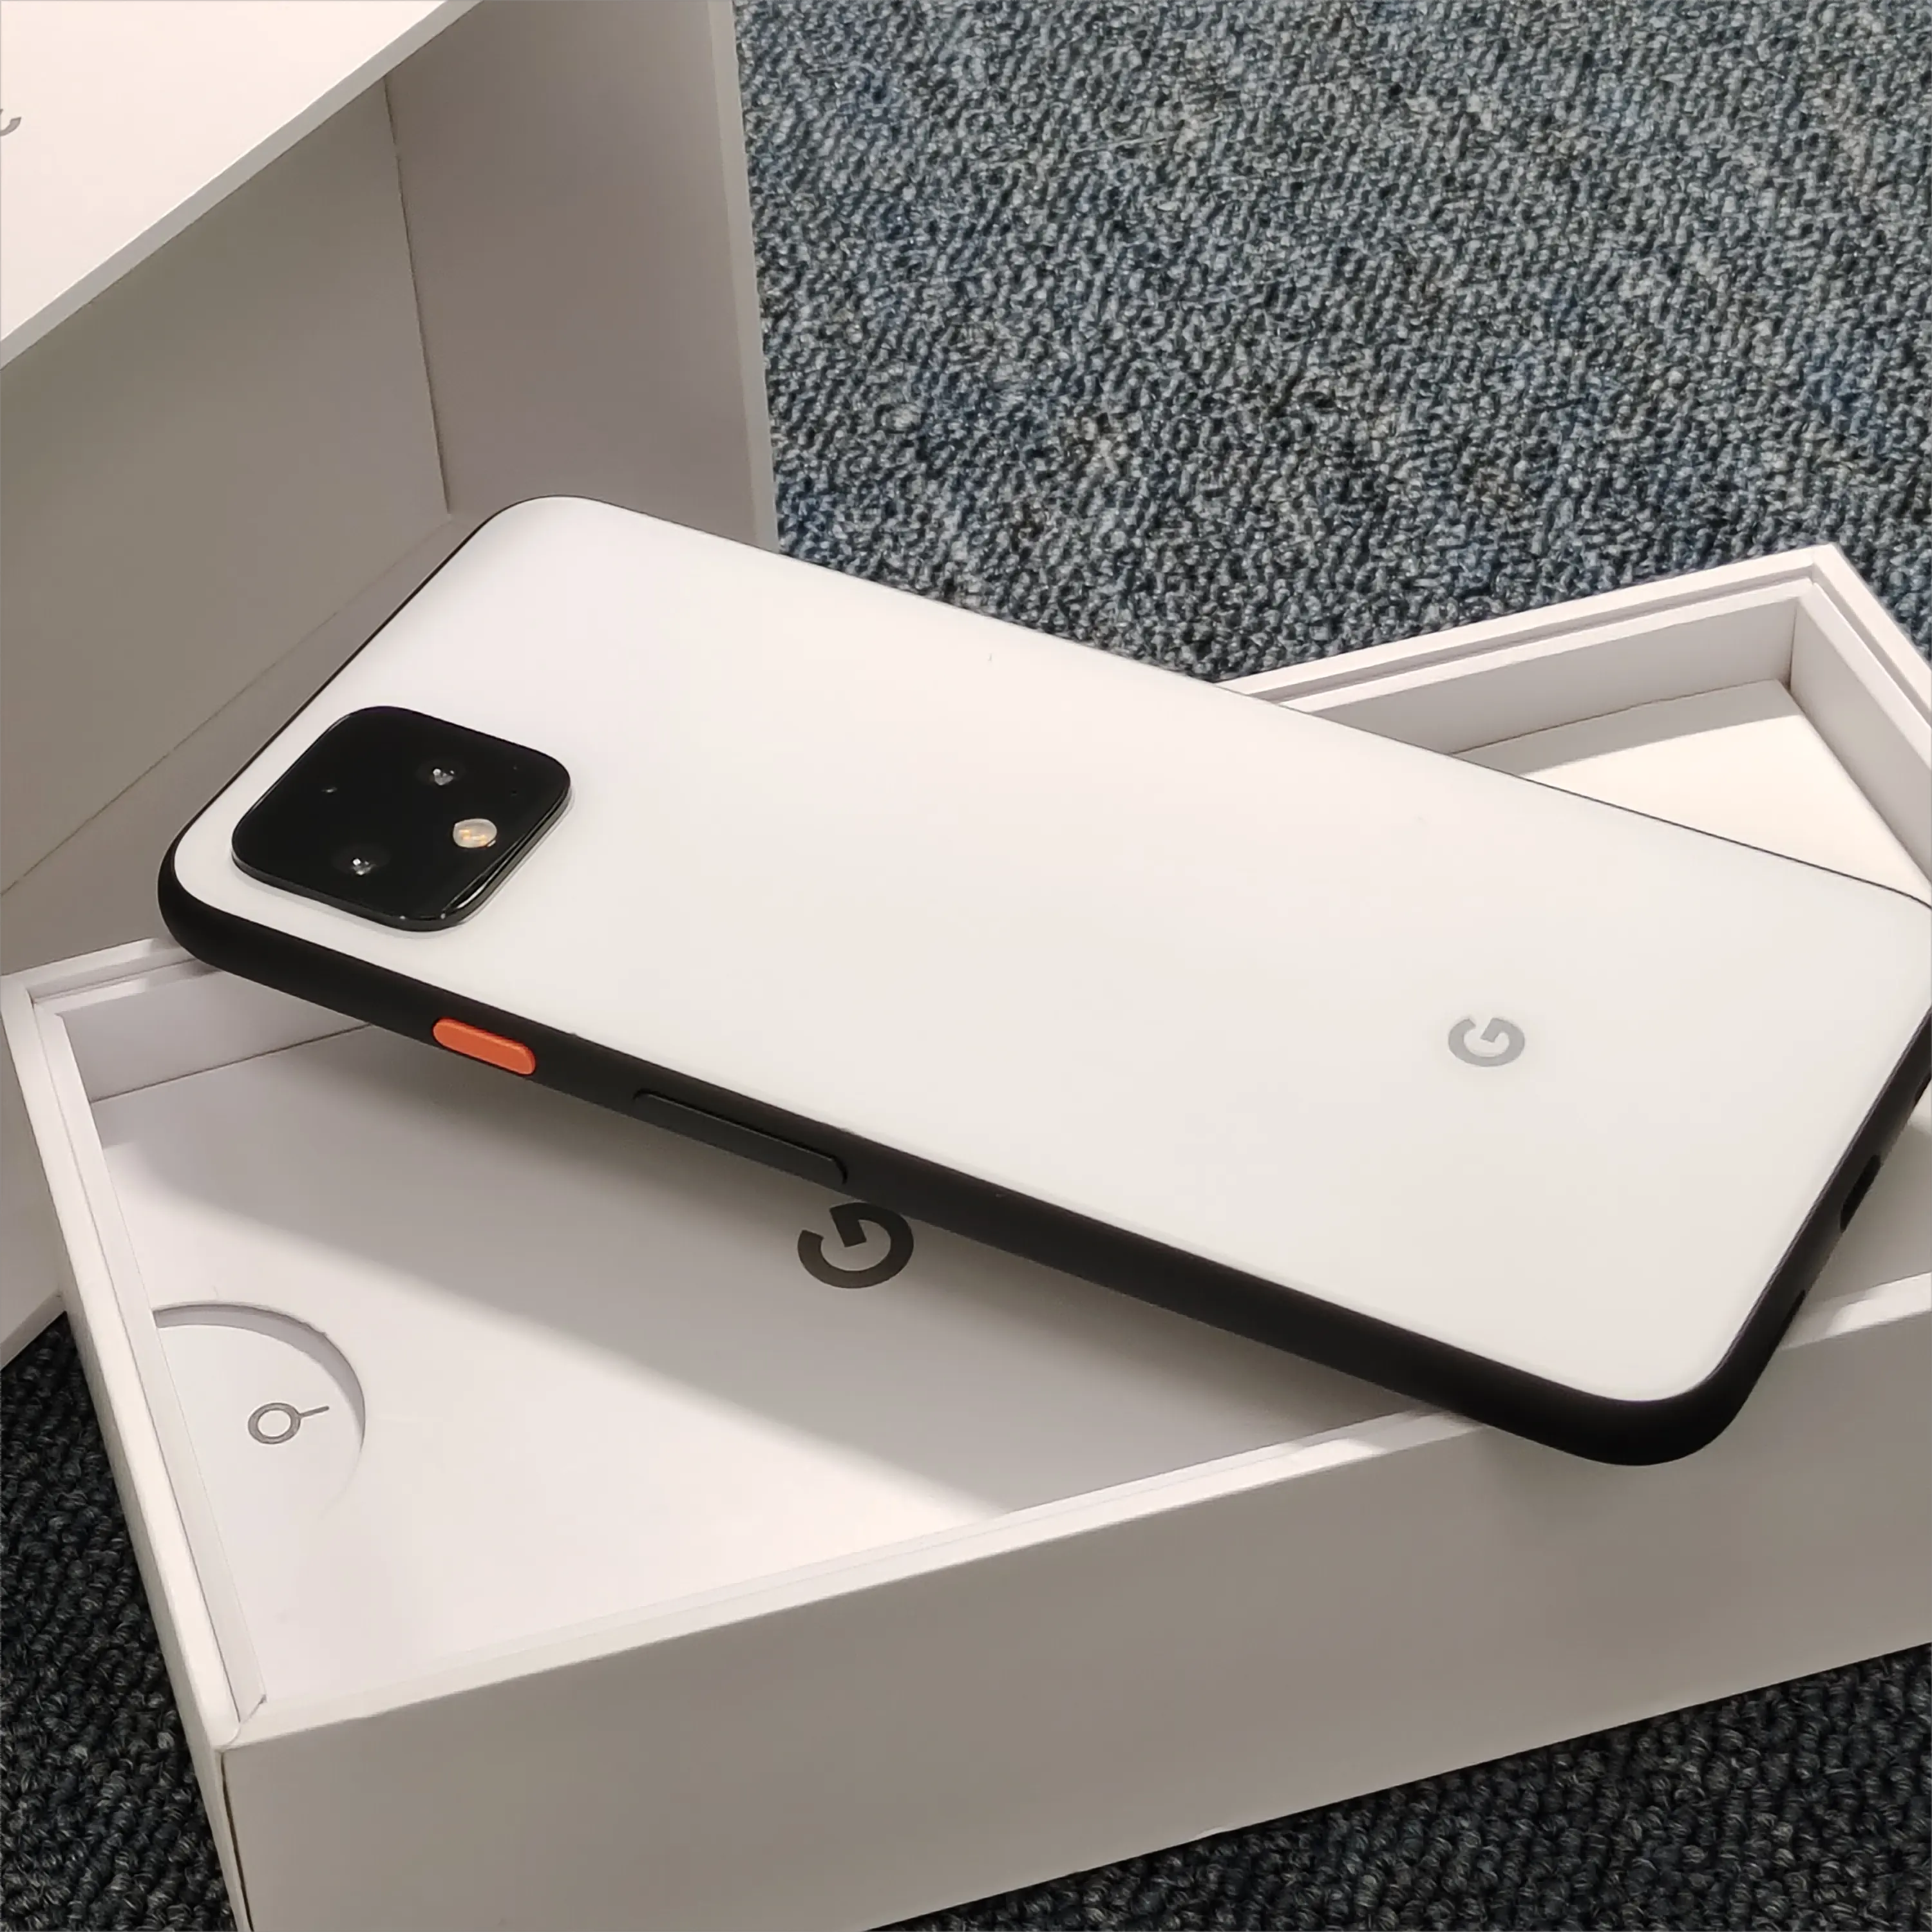 Nuevo Original para Google Pixel 4 Phone 6 + 128GB Original Celulares Teléfono móvil para Google Pixel 4 5,7 pulgadas Smartphone